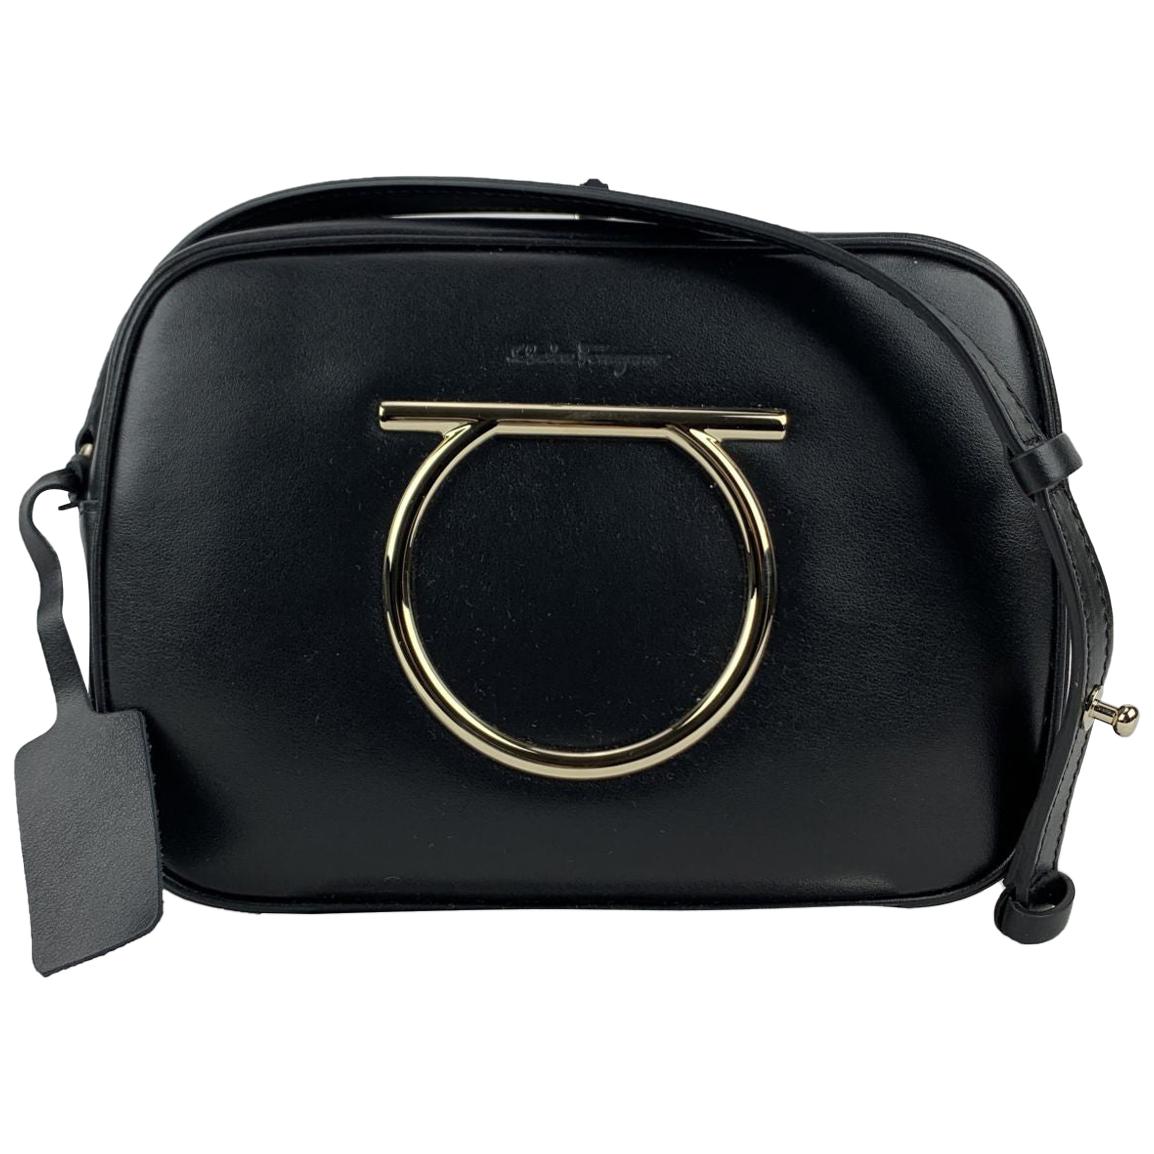 Salvatore Ferragamo Black Leather Gancino Vela CC Small Shoulder Bag